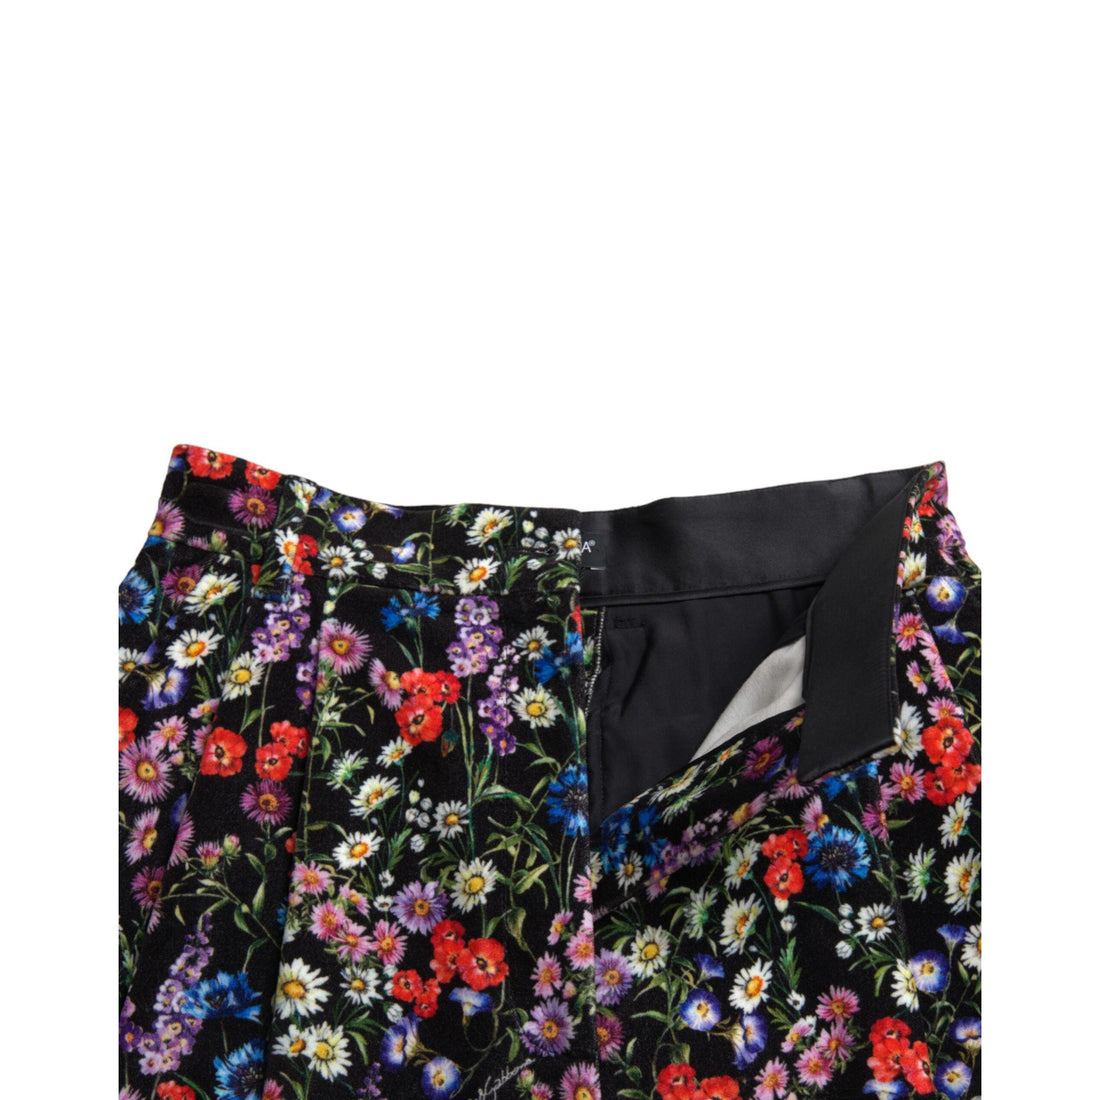 Dolce & Gabbana Black Floral High Waist Hot Pants Shorts